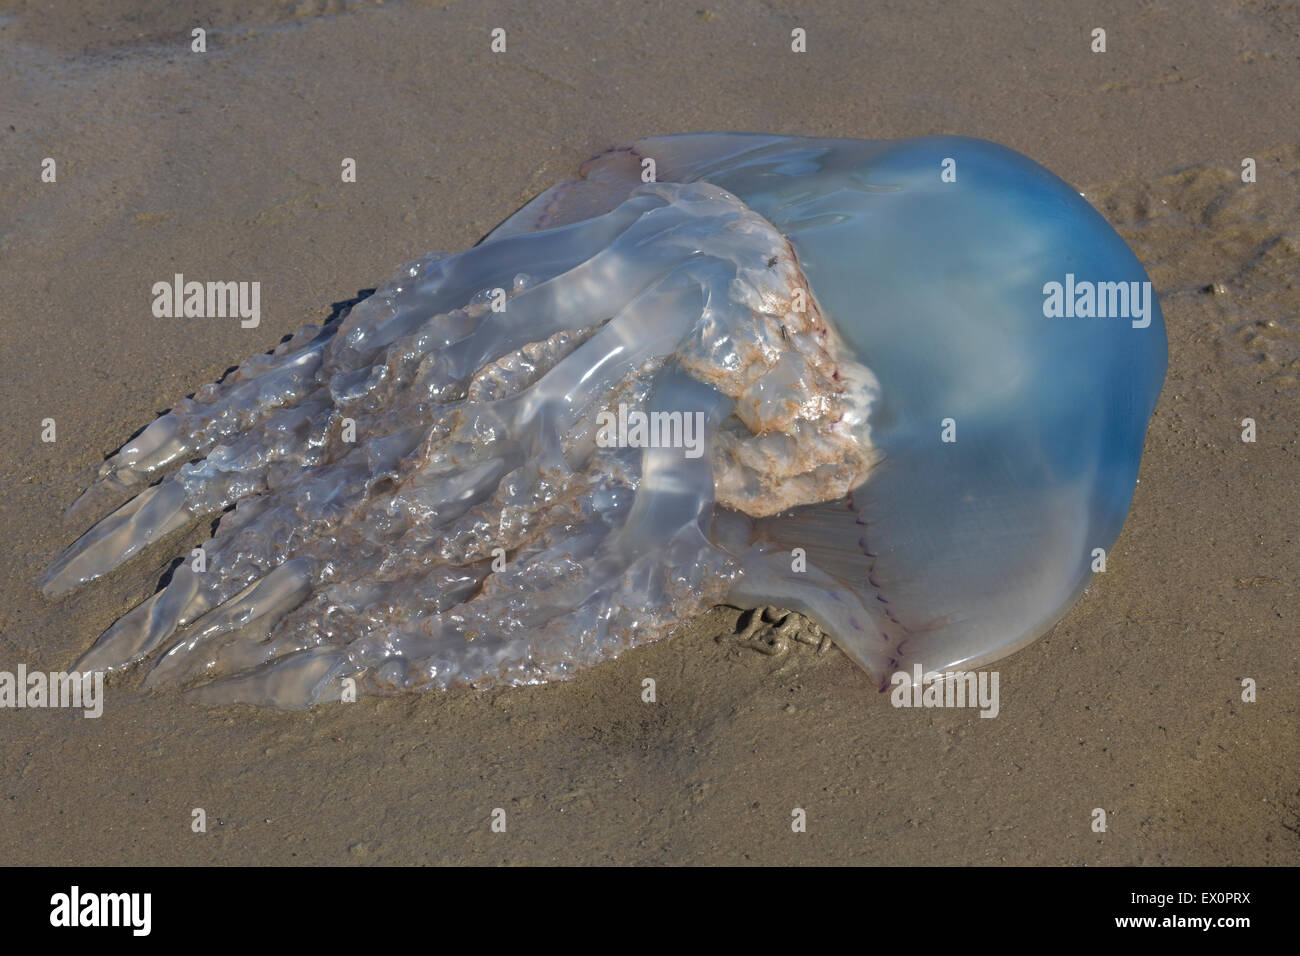 Dead Jelly fish on Beach Stock Photo